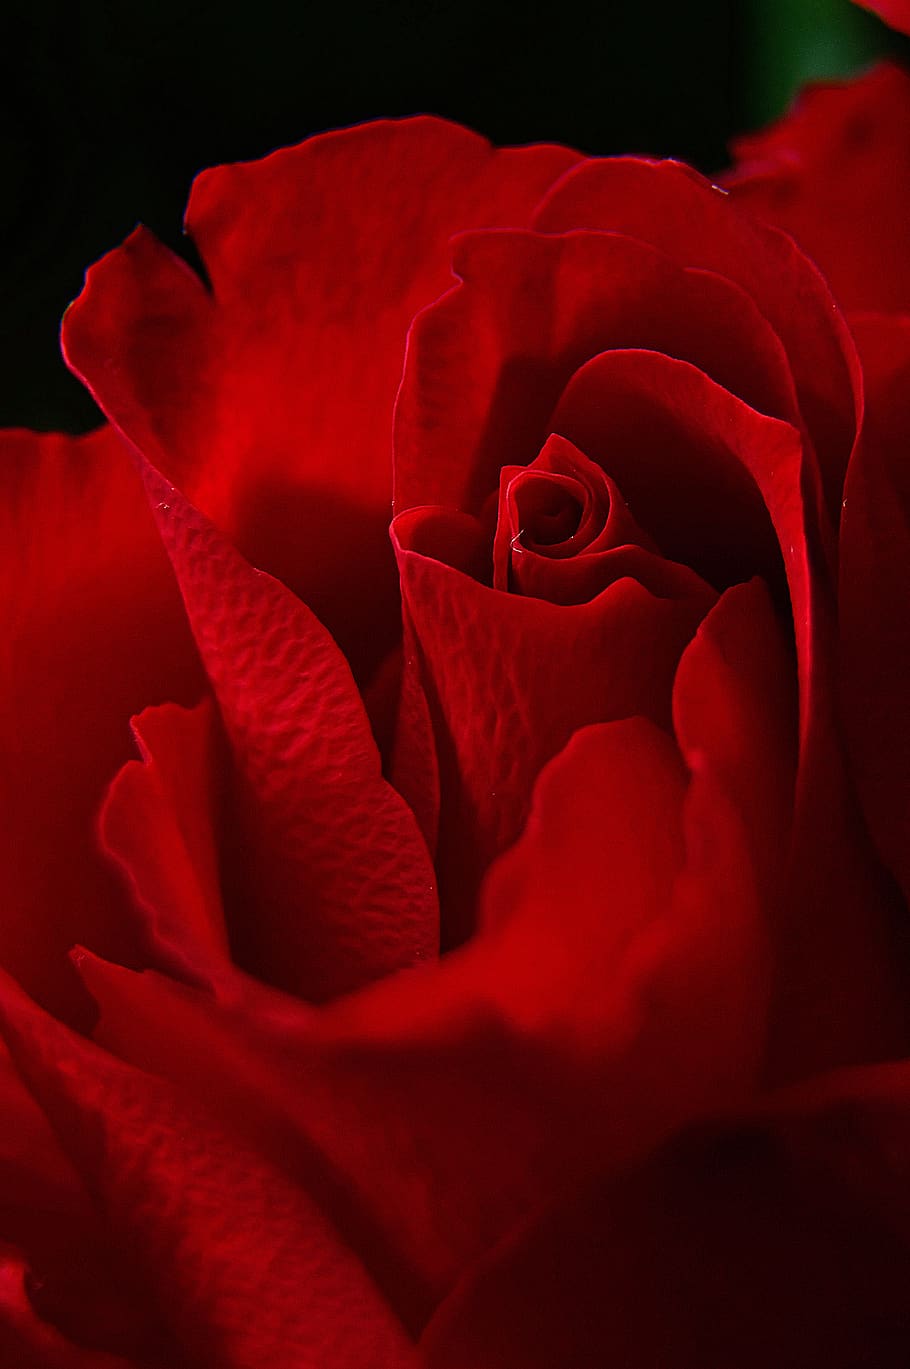 rose, rose petals, red rose, romantic, love, romance, nature, pink, wallpaper, flowers